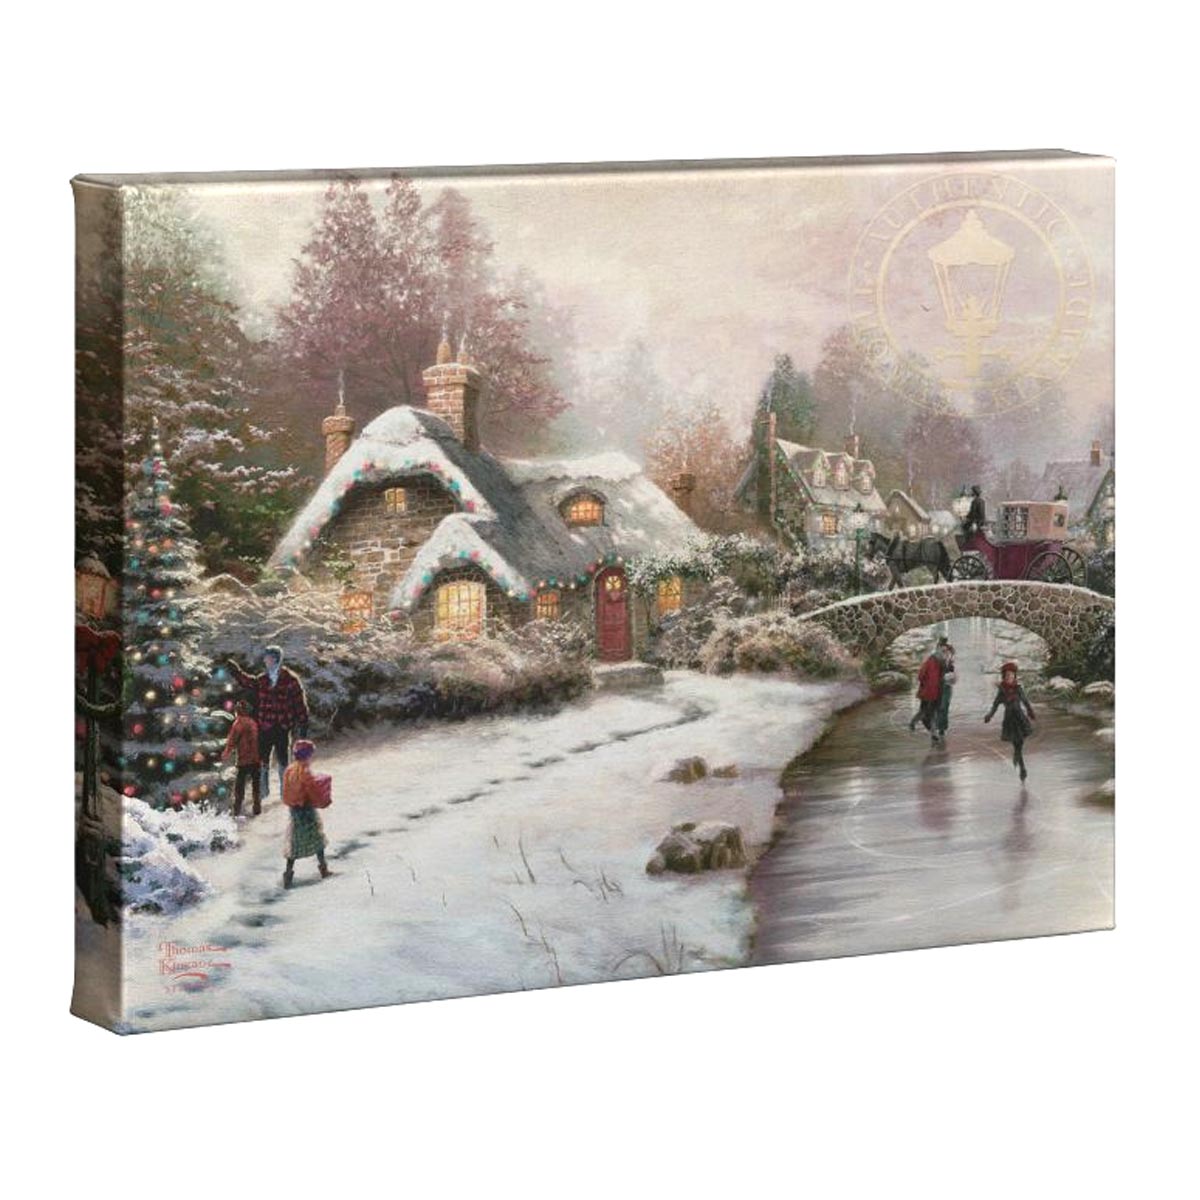 Thomas Kinkade Studios The Nativity 10 x 14 Wrapped Canvas